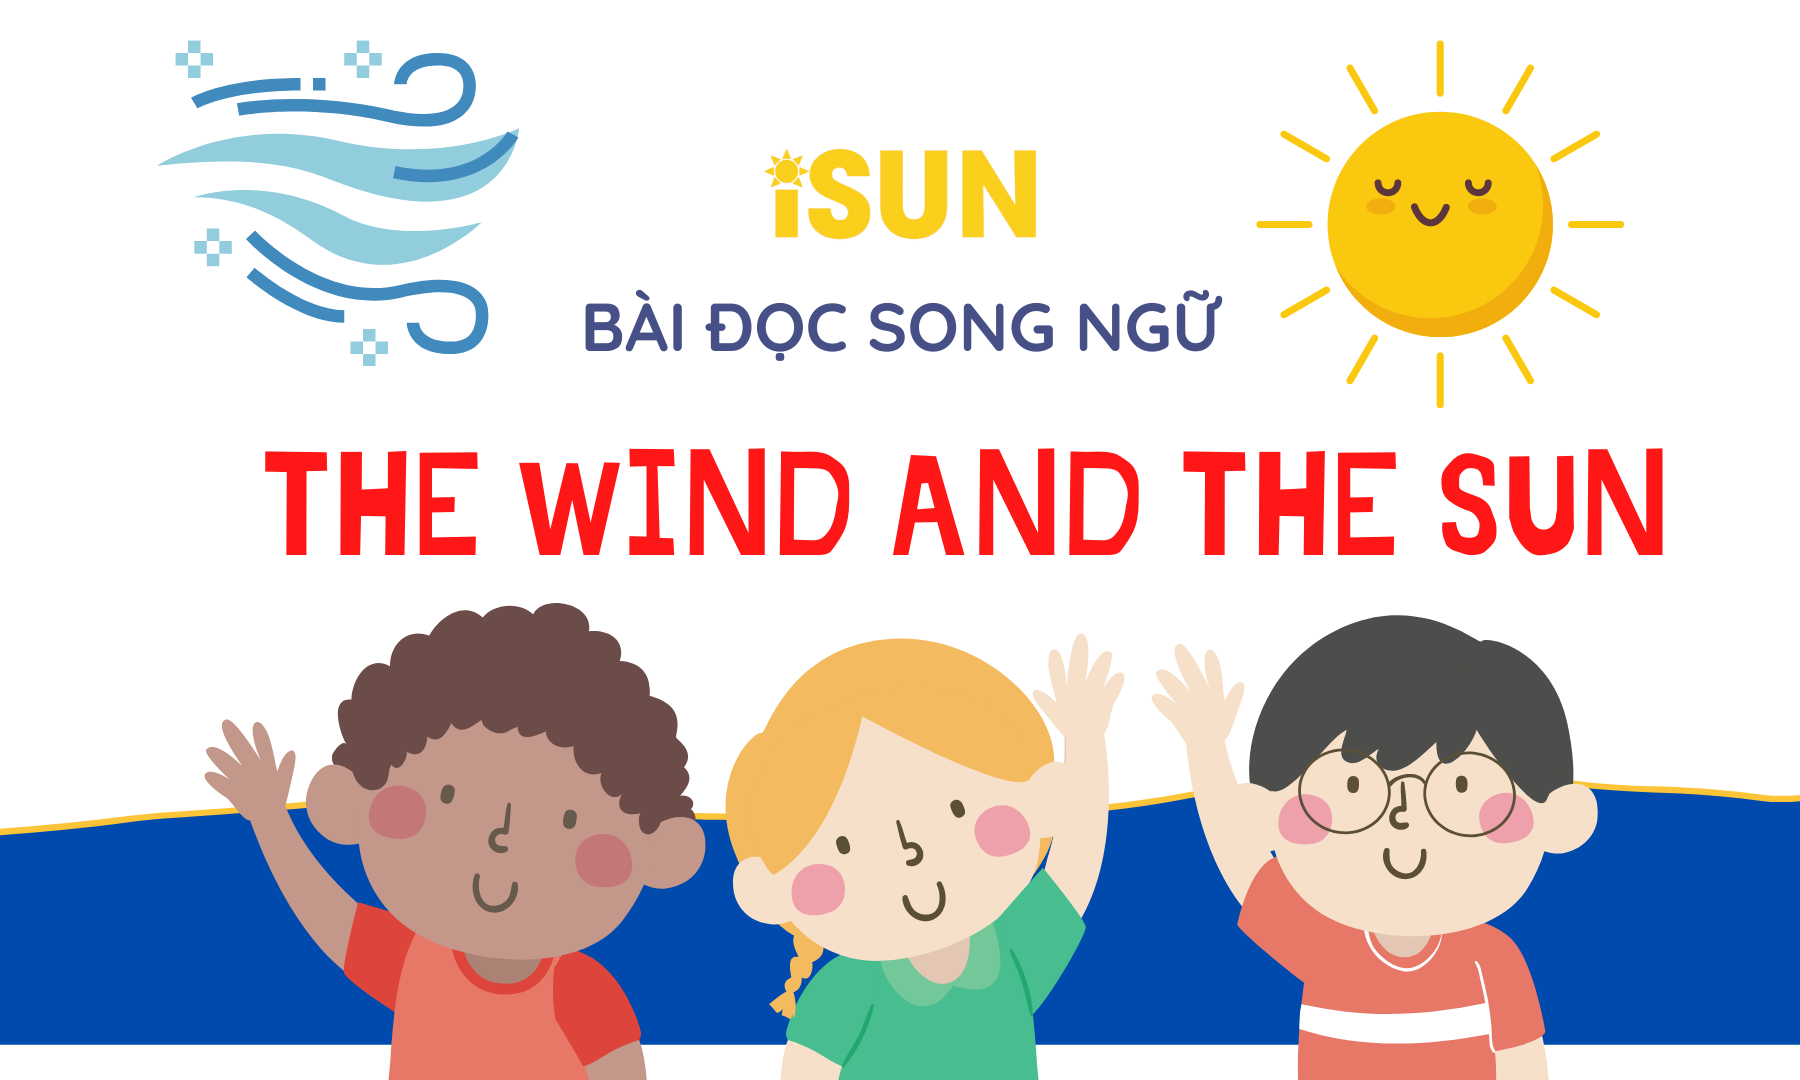 BÀI ĐỌC SONG NGỮ THE WIND AND THE SUN